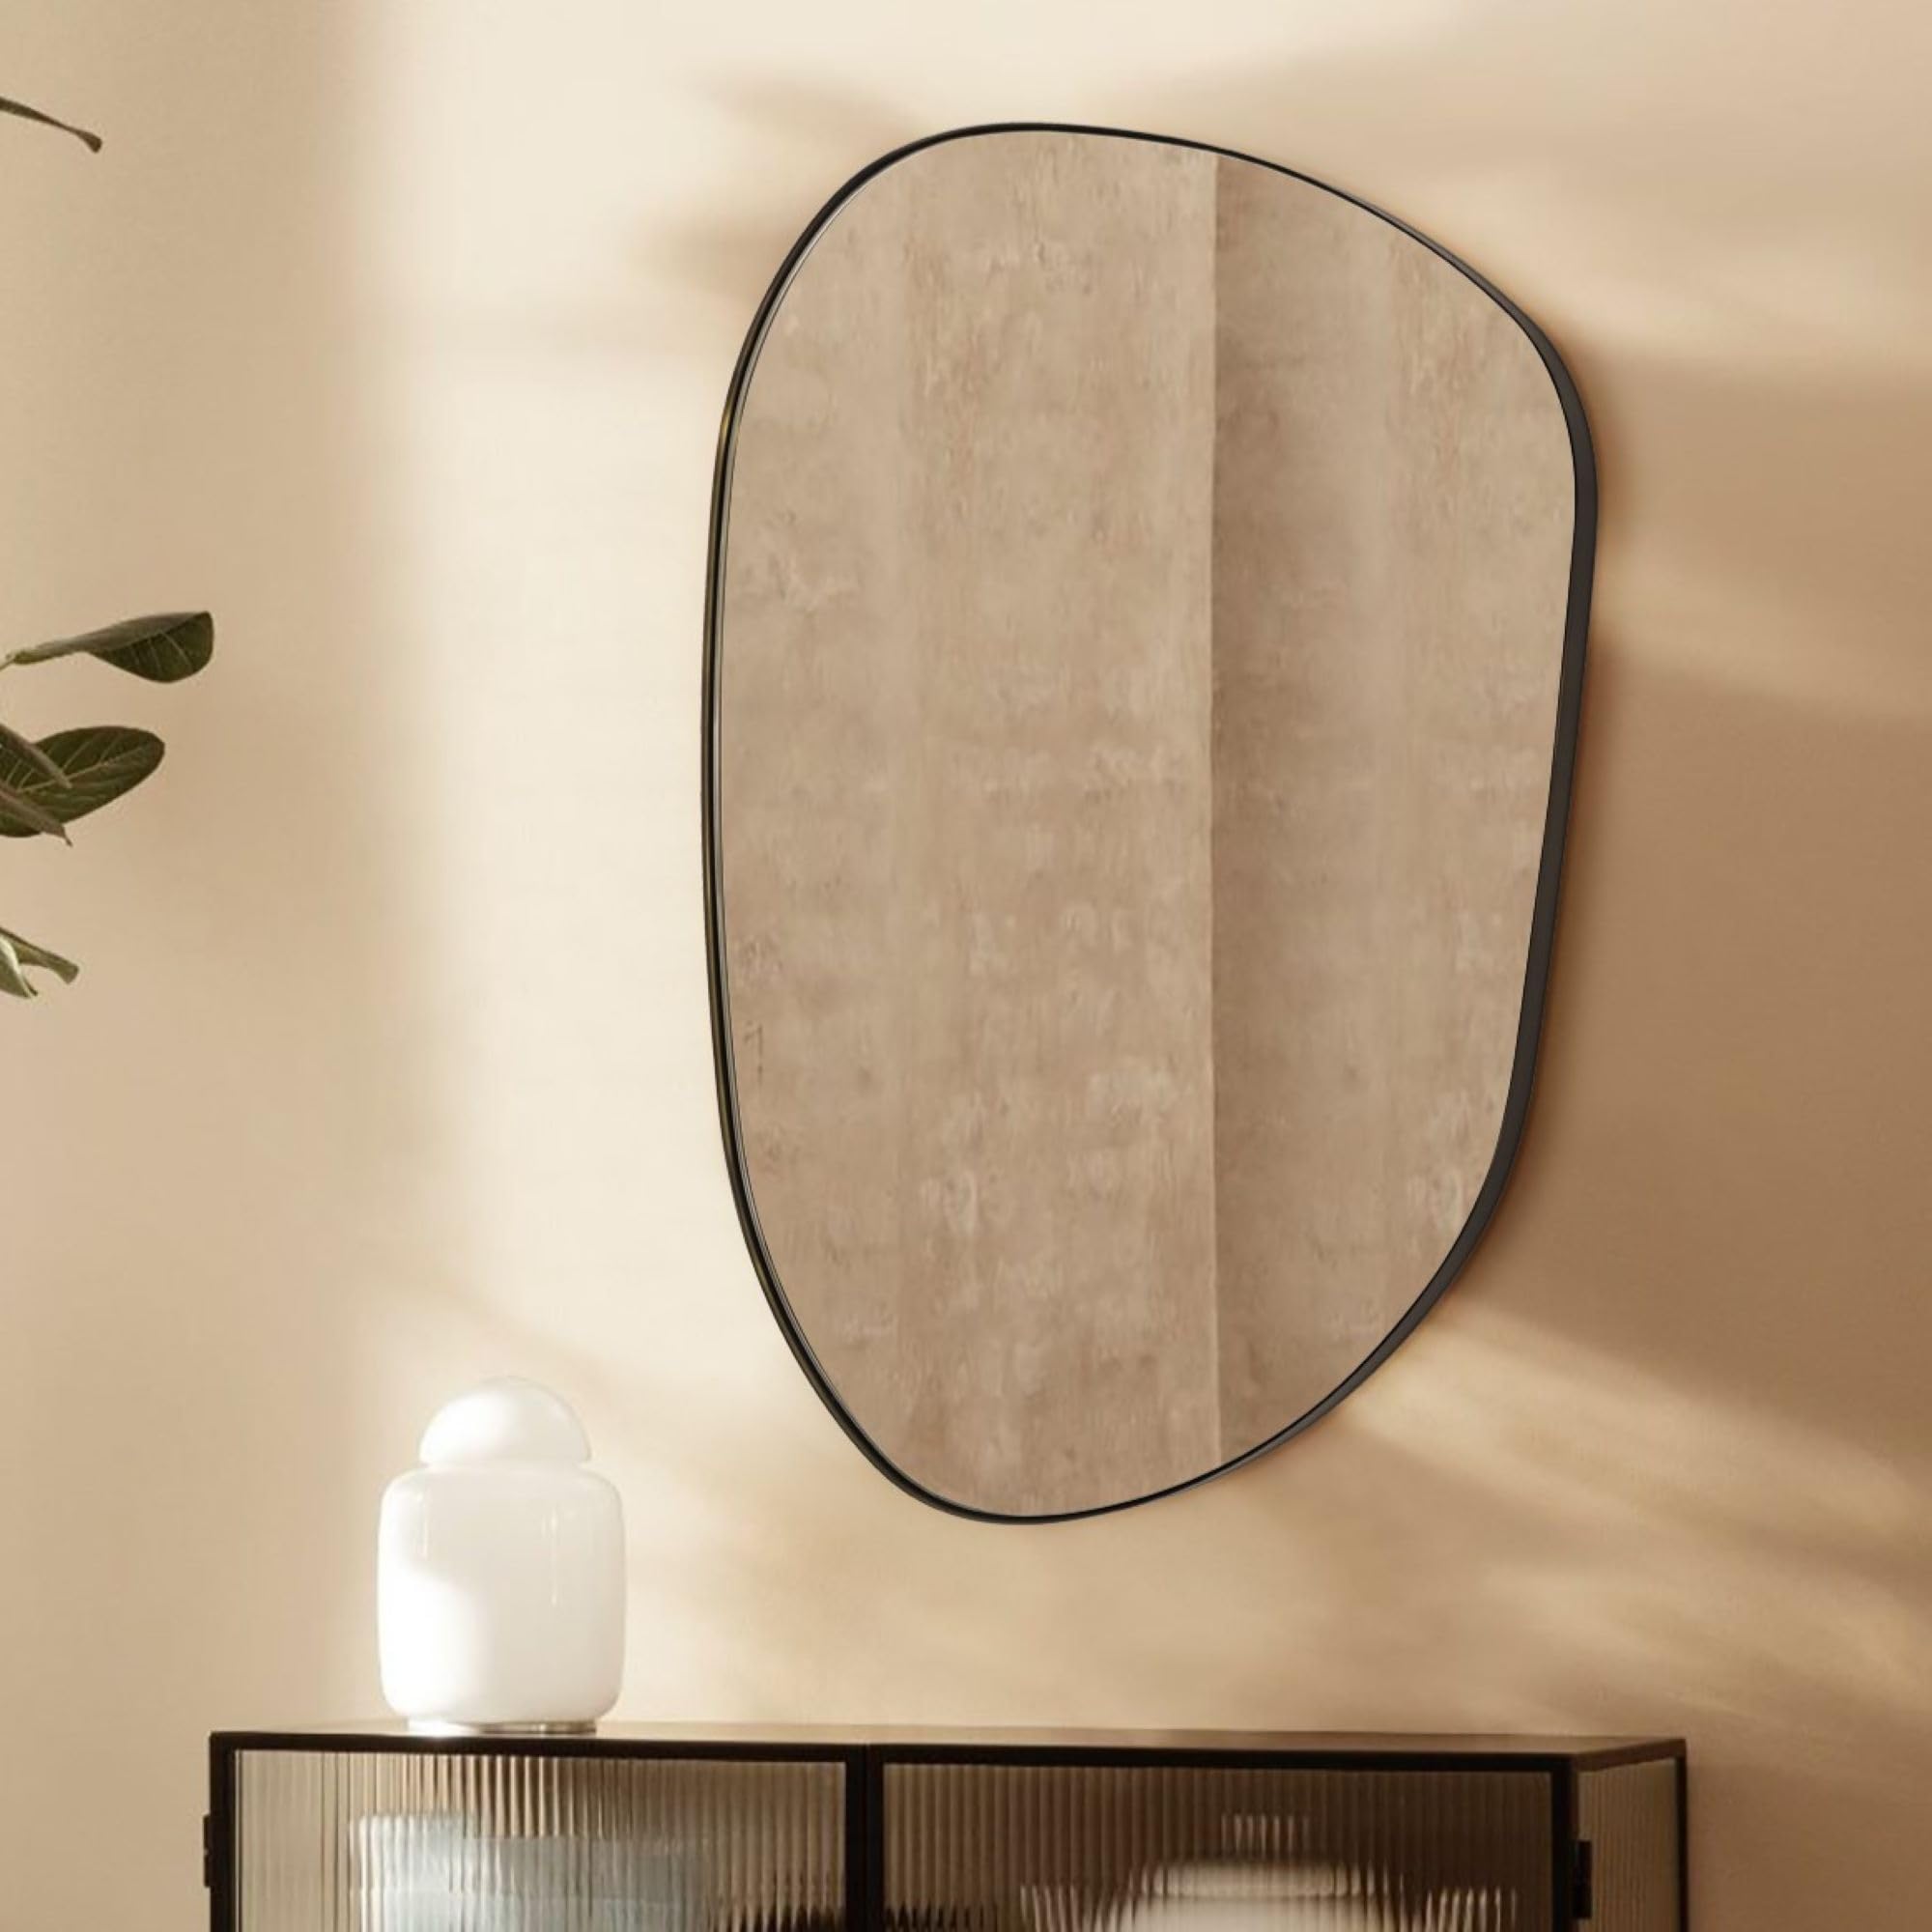 Bertlinde asymmetrical wall mirror irregular shaped mirror for living room, bathroom or entry